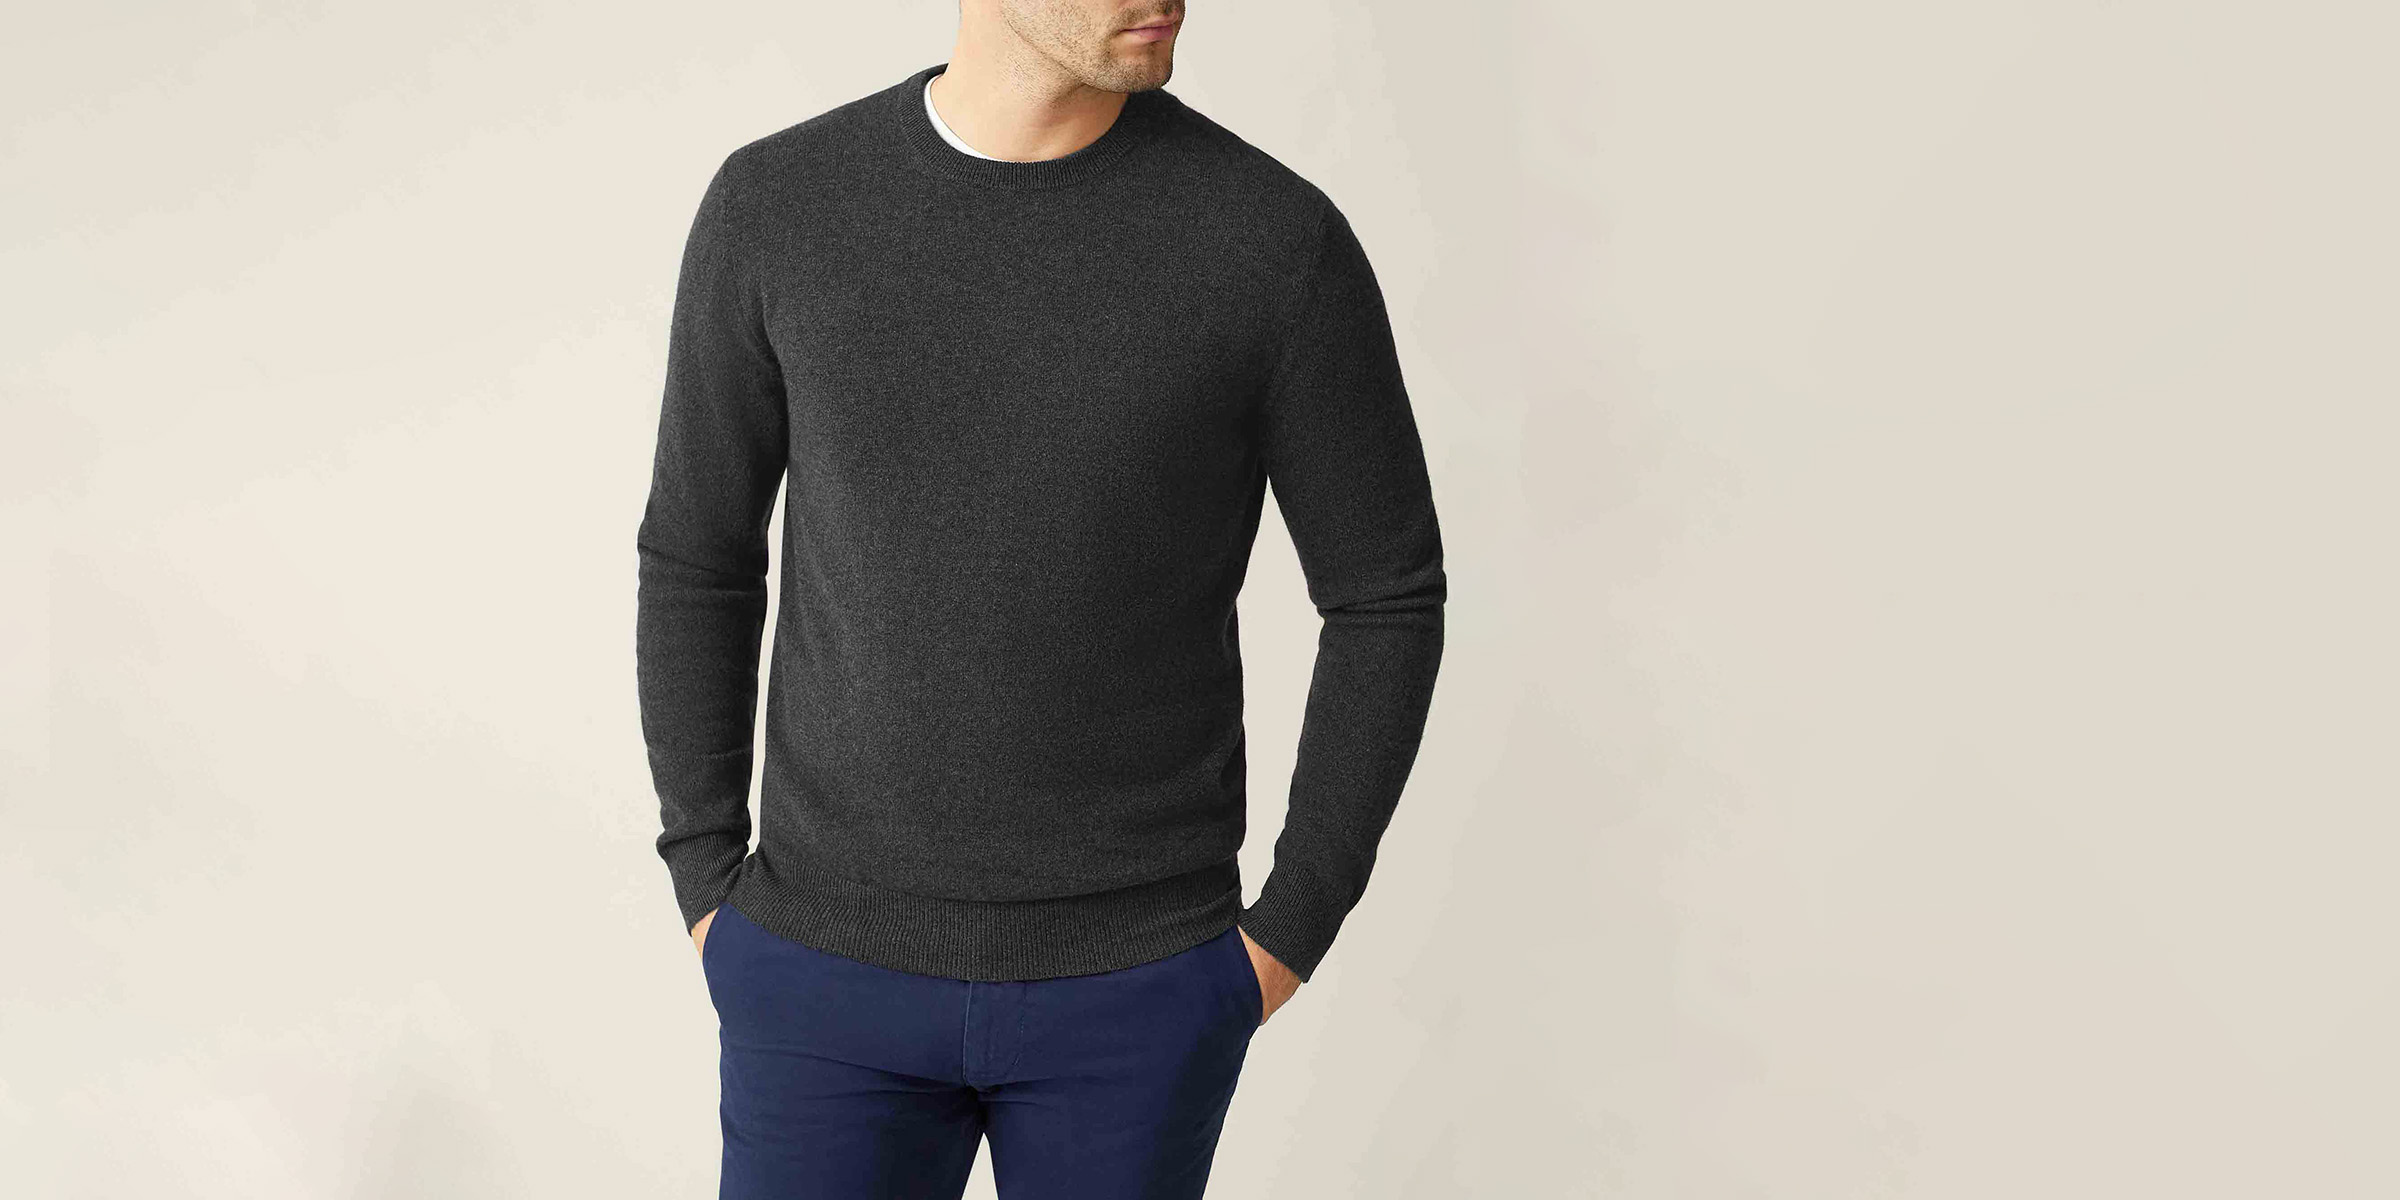 23-best-sweatshirts-for-men:-relax-in-style